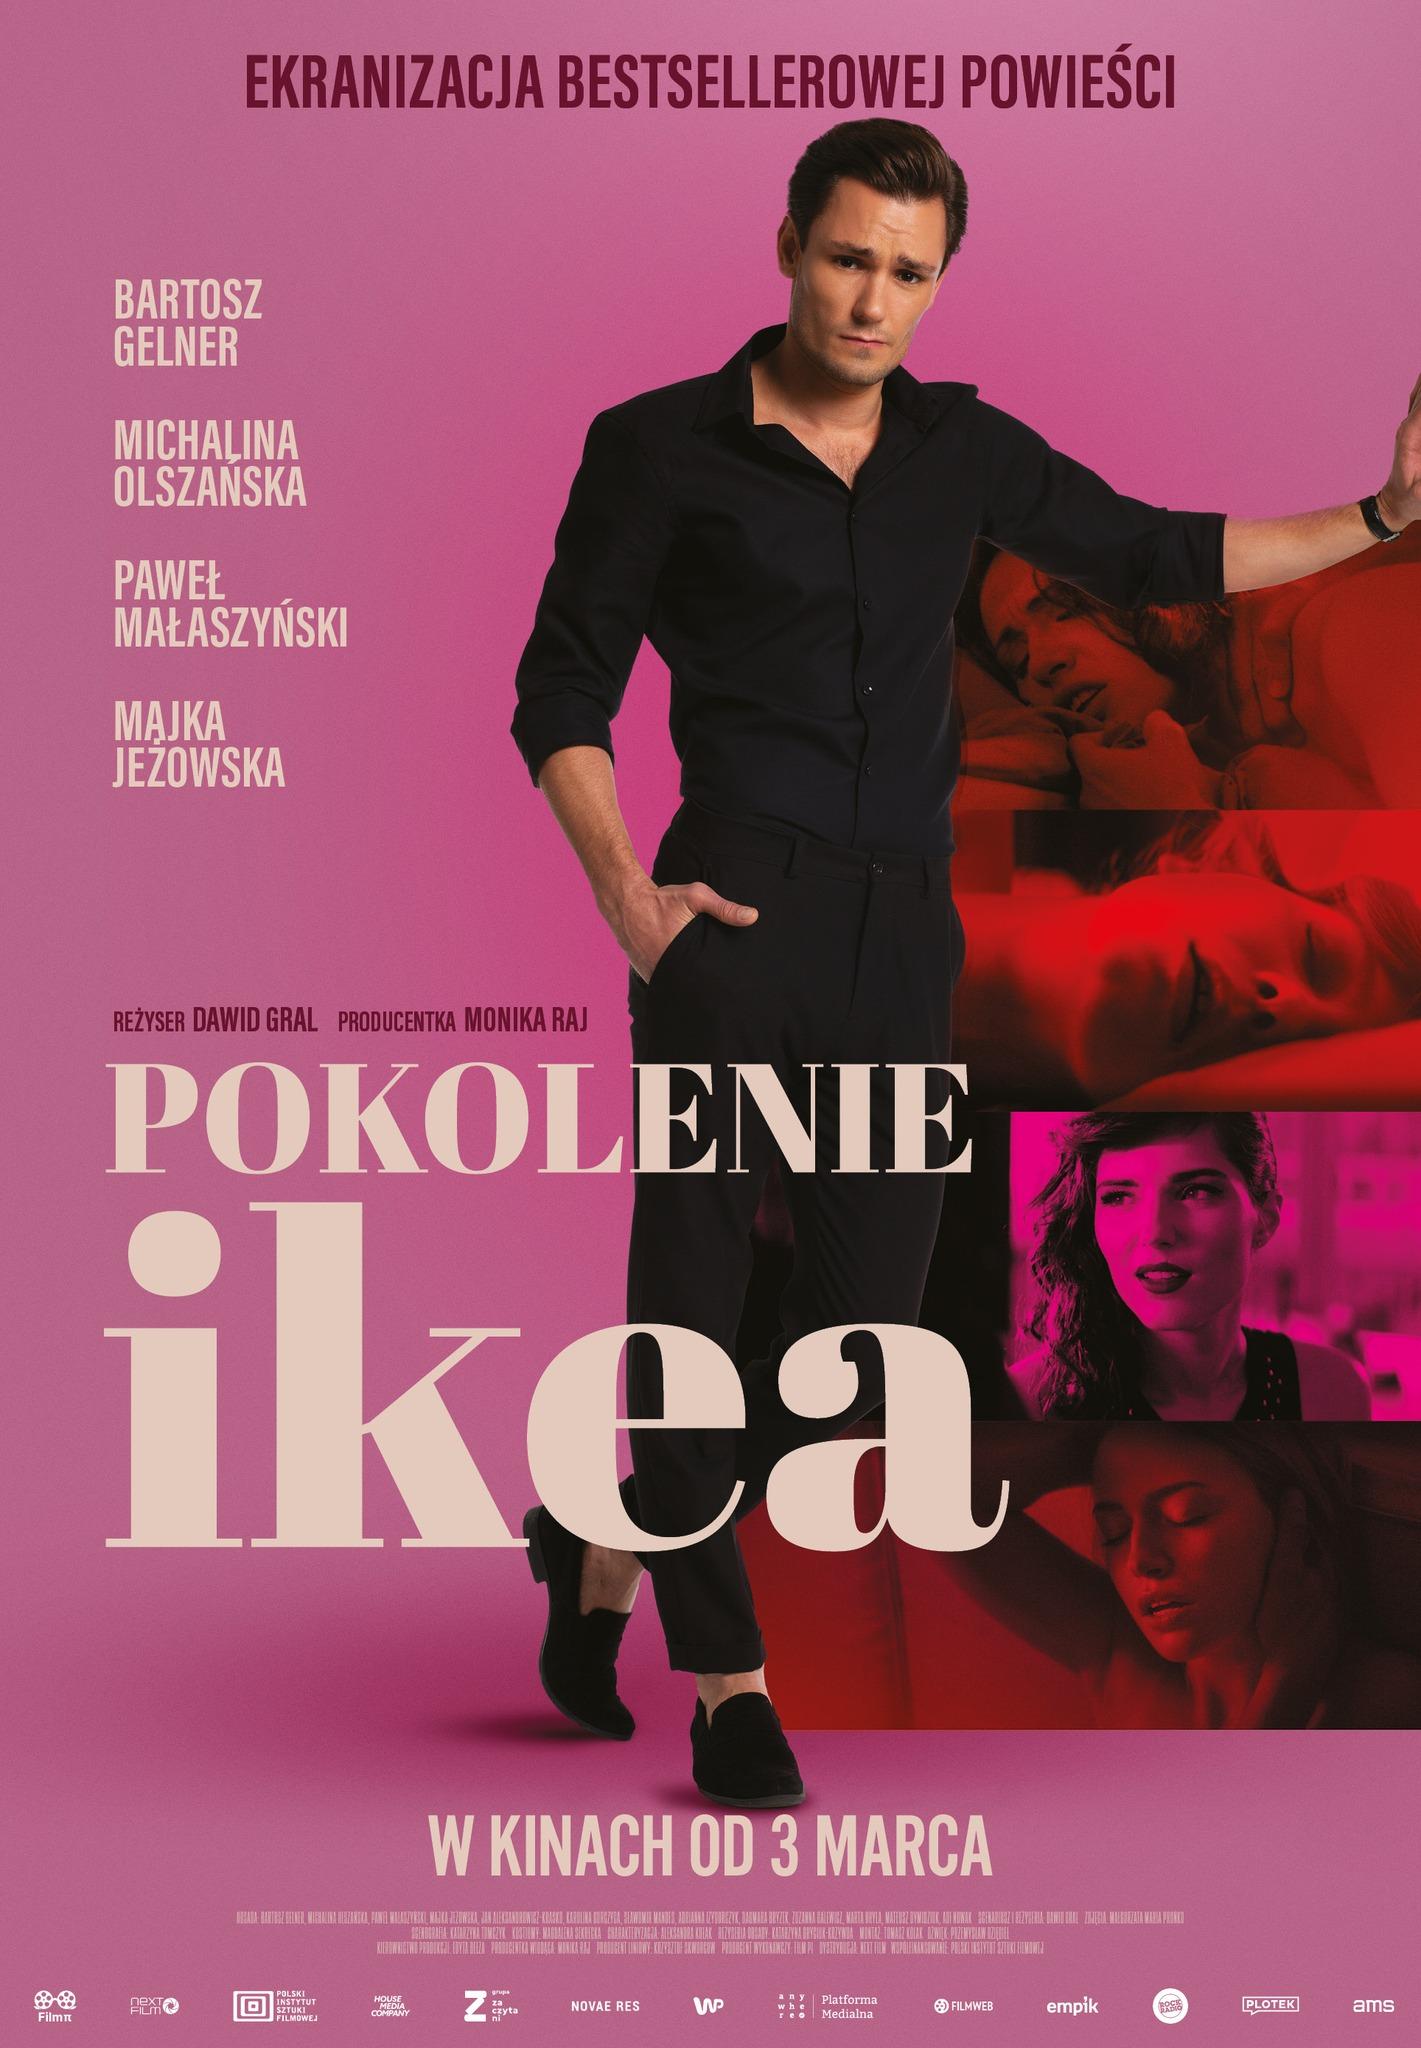 Pokolenie Ikea (ukr.) / Покоління Iкea